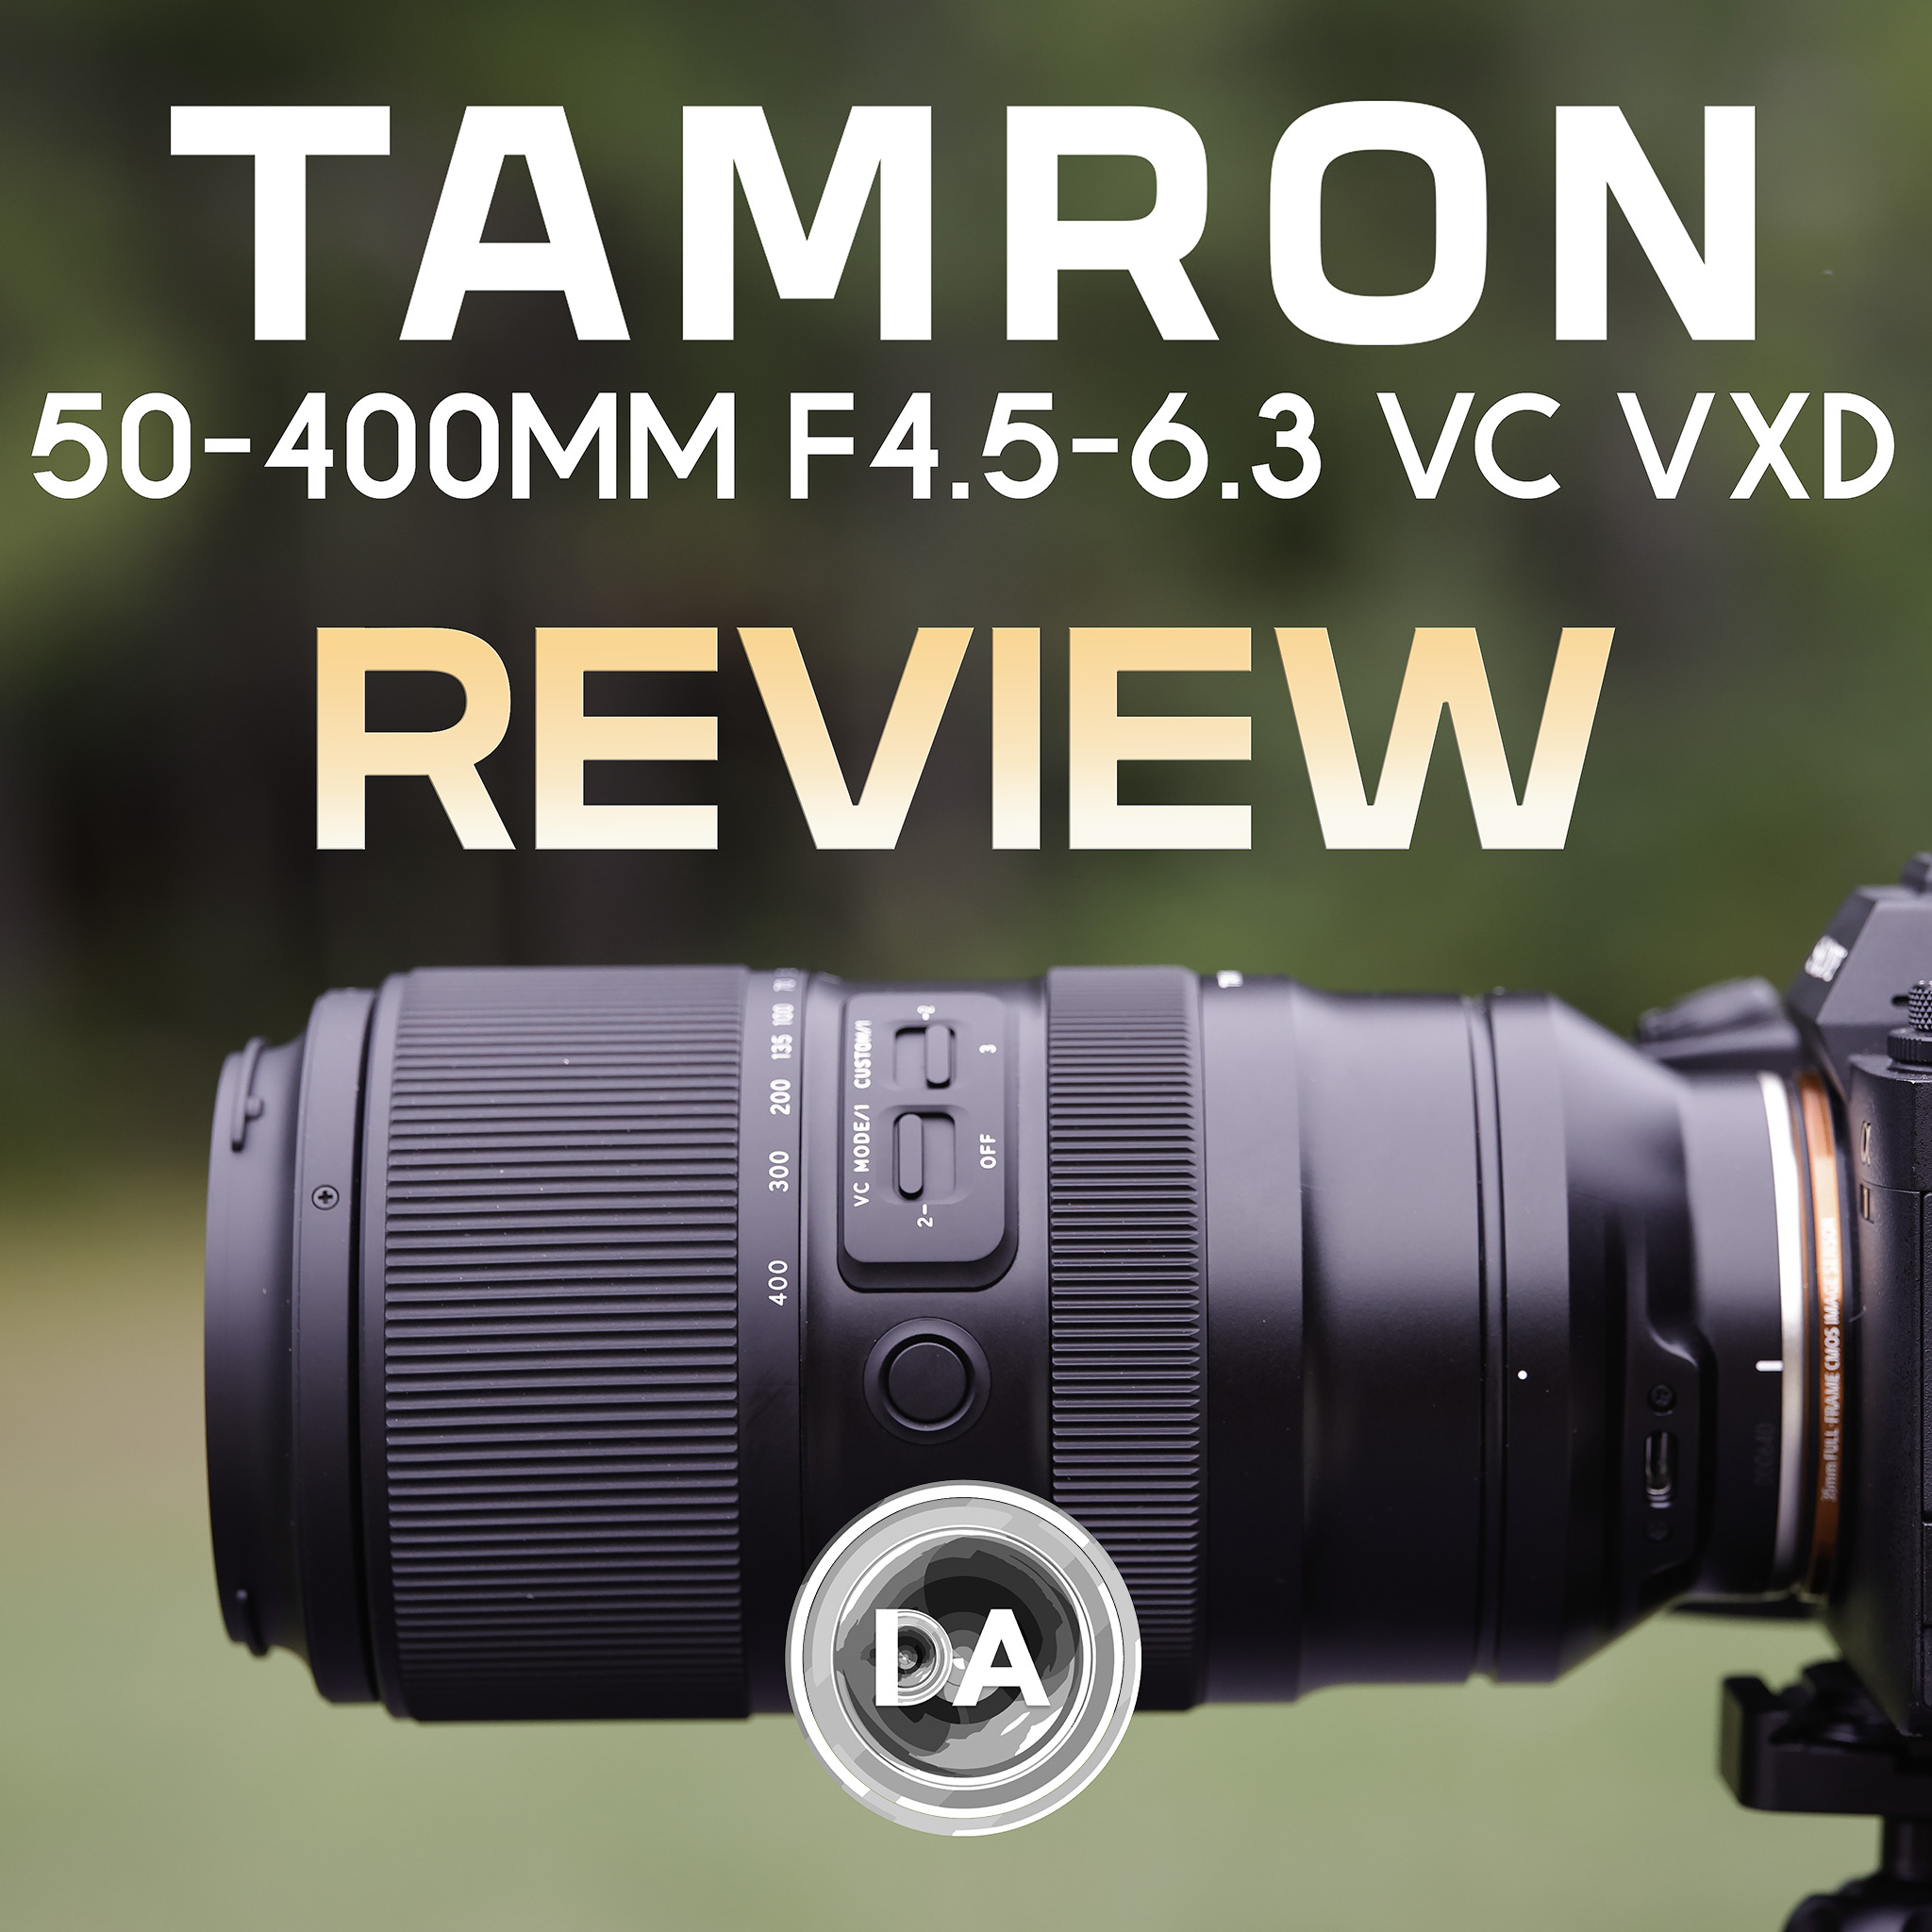 Tamron 50-400mm F4.5-6.3 VC VXD Review (A067) - DustinAbbott.net